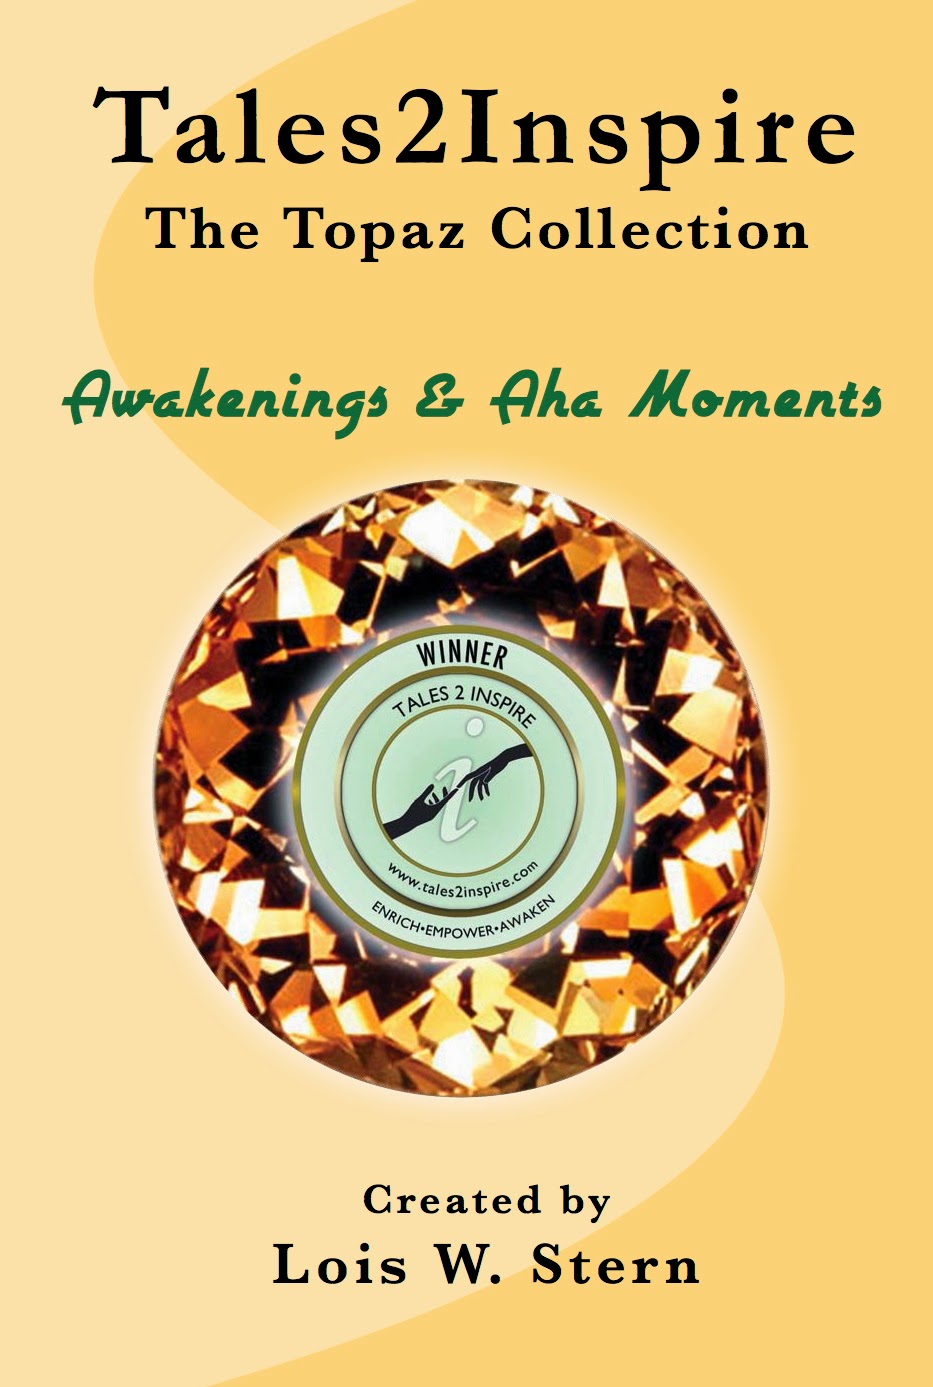 http://www.amazon.com/Tales2Inspire-Topaz-Collection-Awakenings-Tales2InspireTM-ebook/dp/B00GNL1W5C/ref=la_B005HOO640_1_1?s=books&ie=UTF8&qid=1399405680&sr=1-1